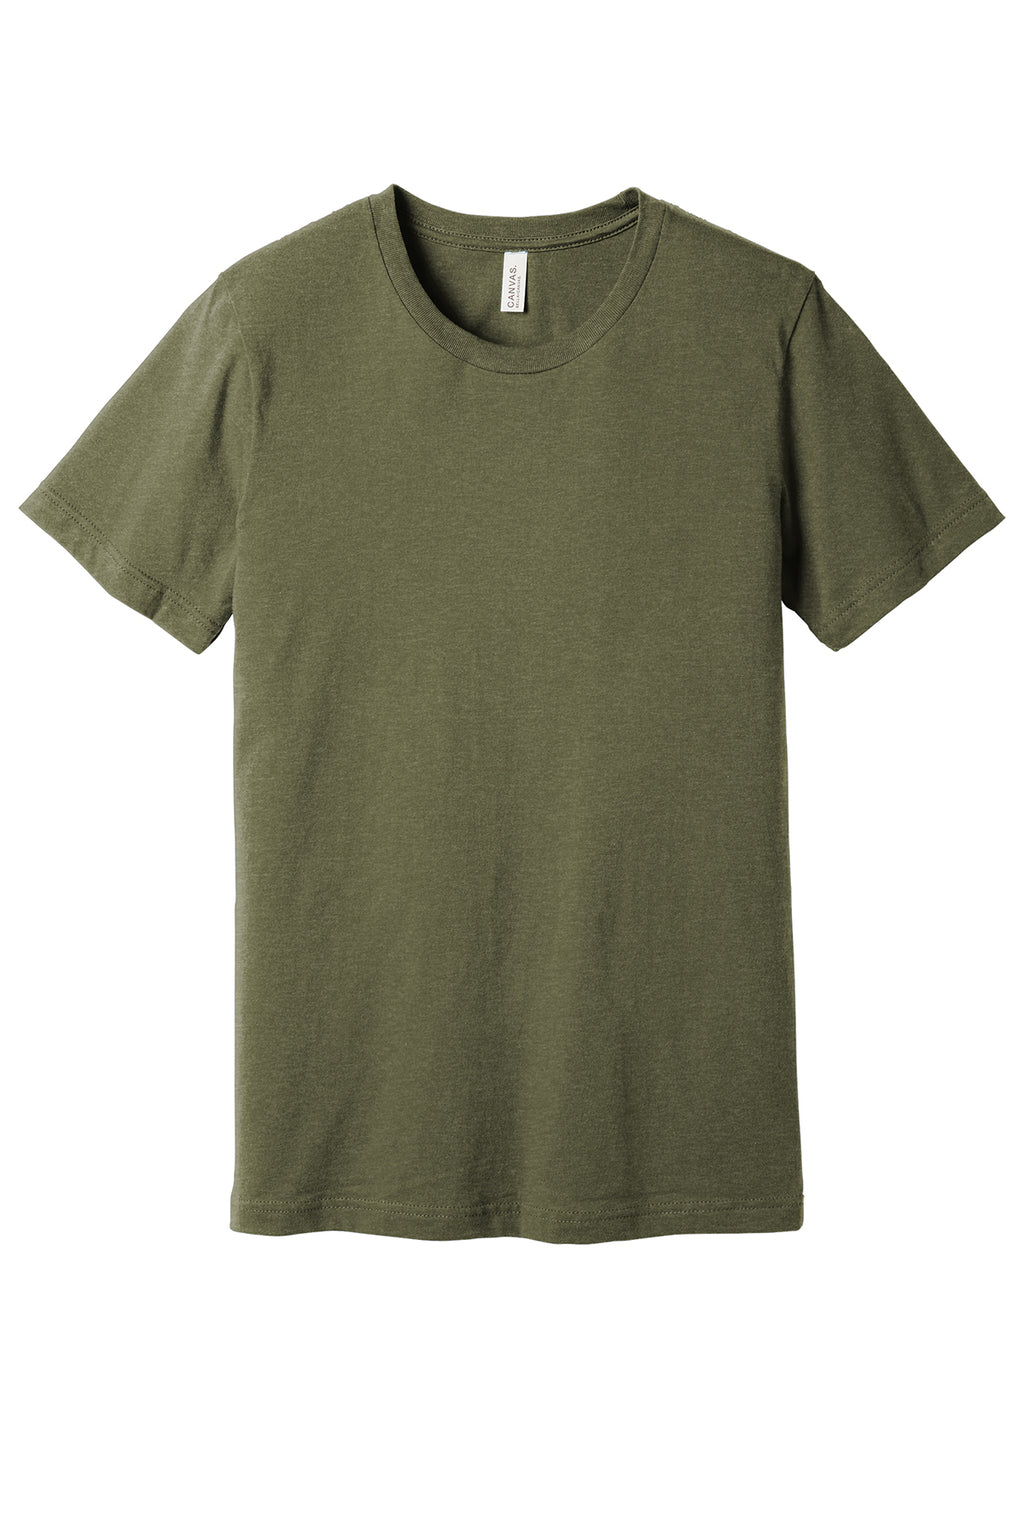 Bella Canvas  Mens/Unisex Cotton Short Sleeve Shirts Heather Olive